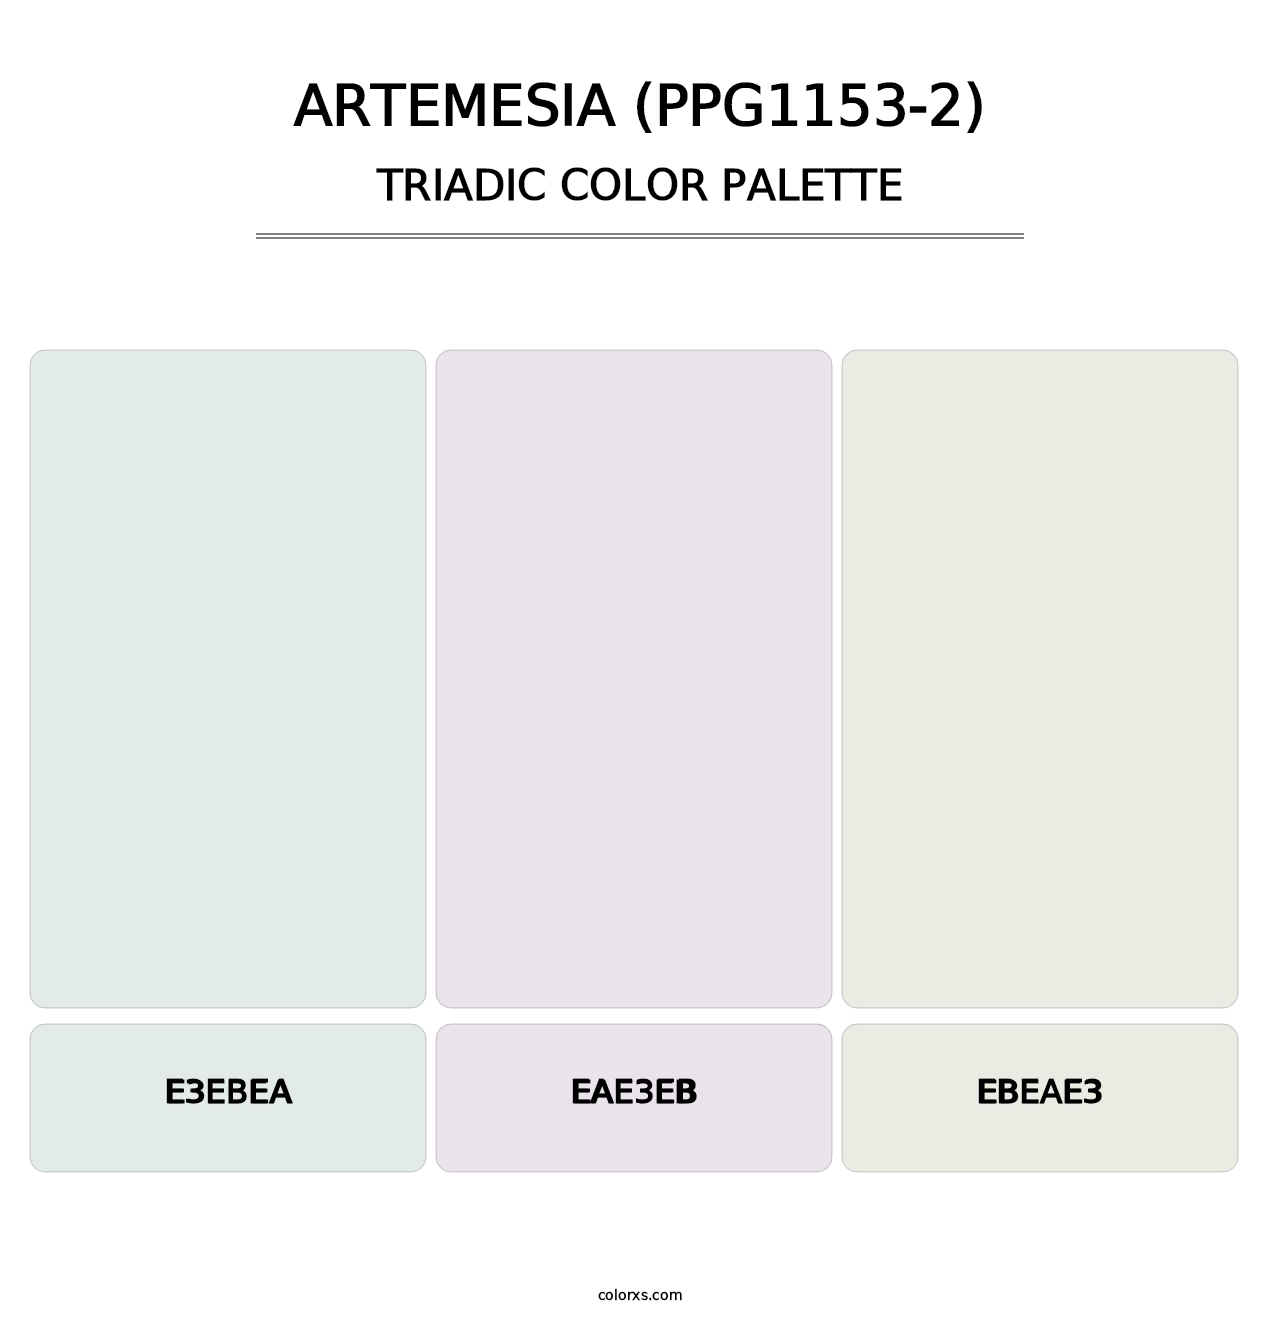 Artemesia (PPG1153-2) - Triadic Color Palette